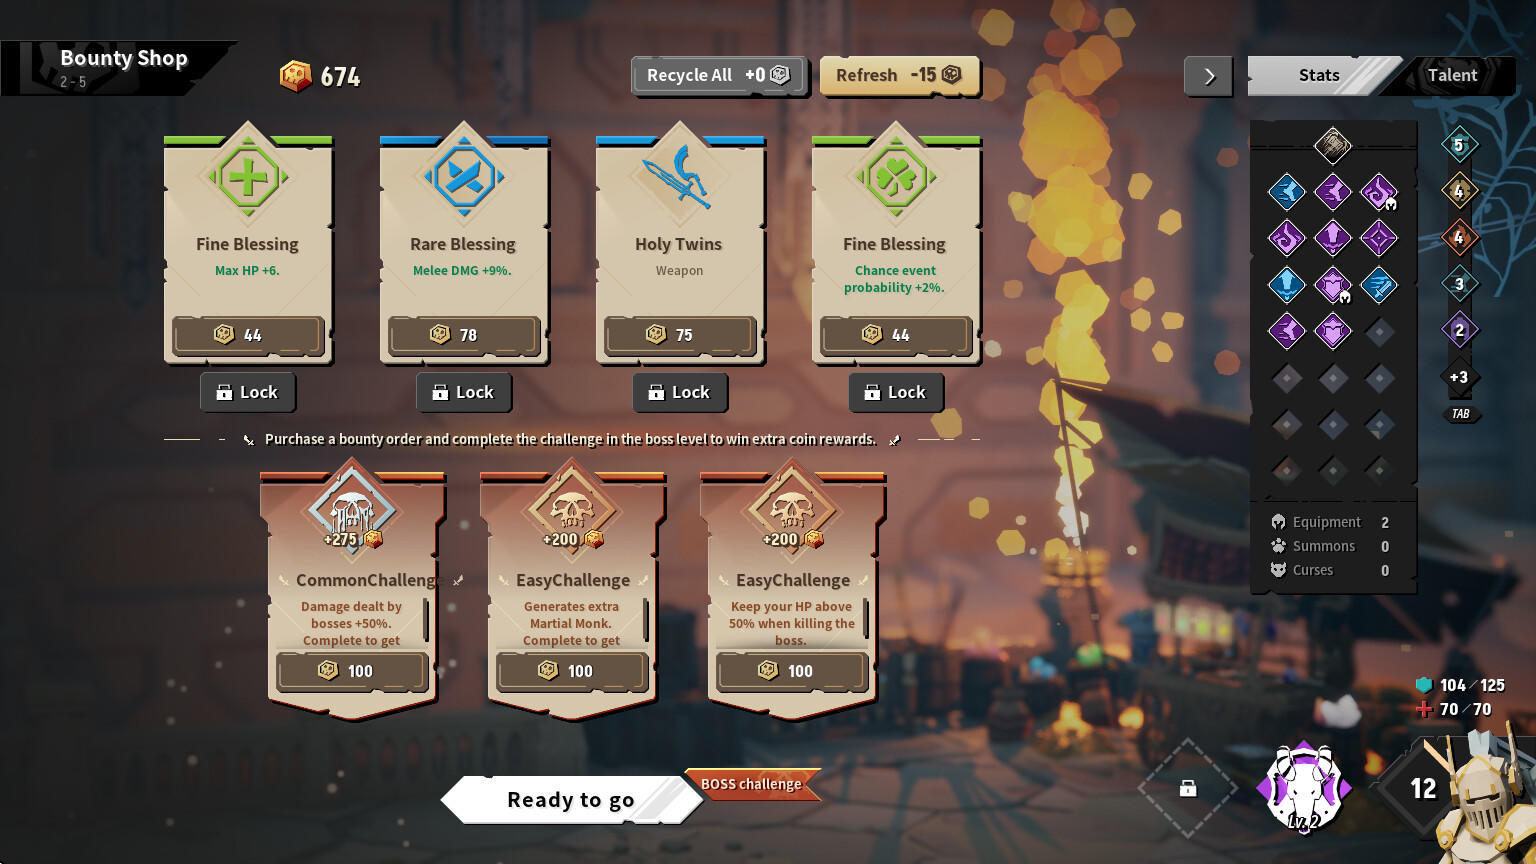 Apocalypse Party screenshot game